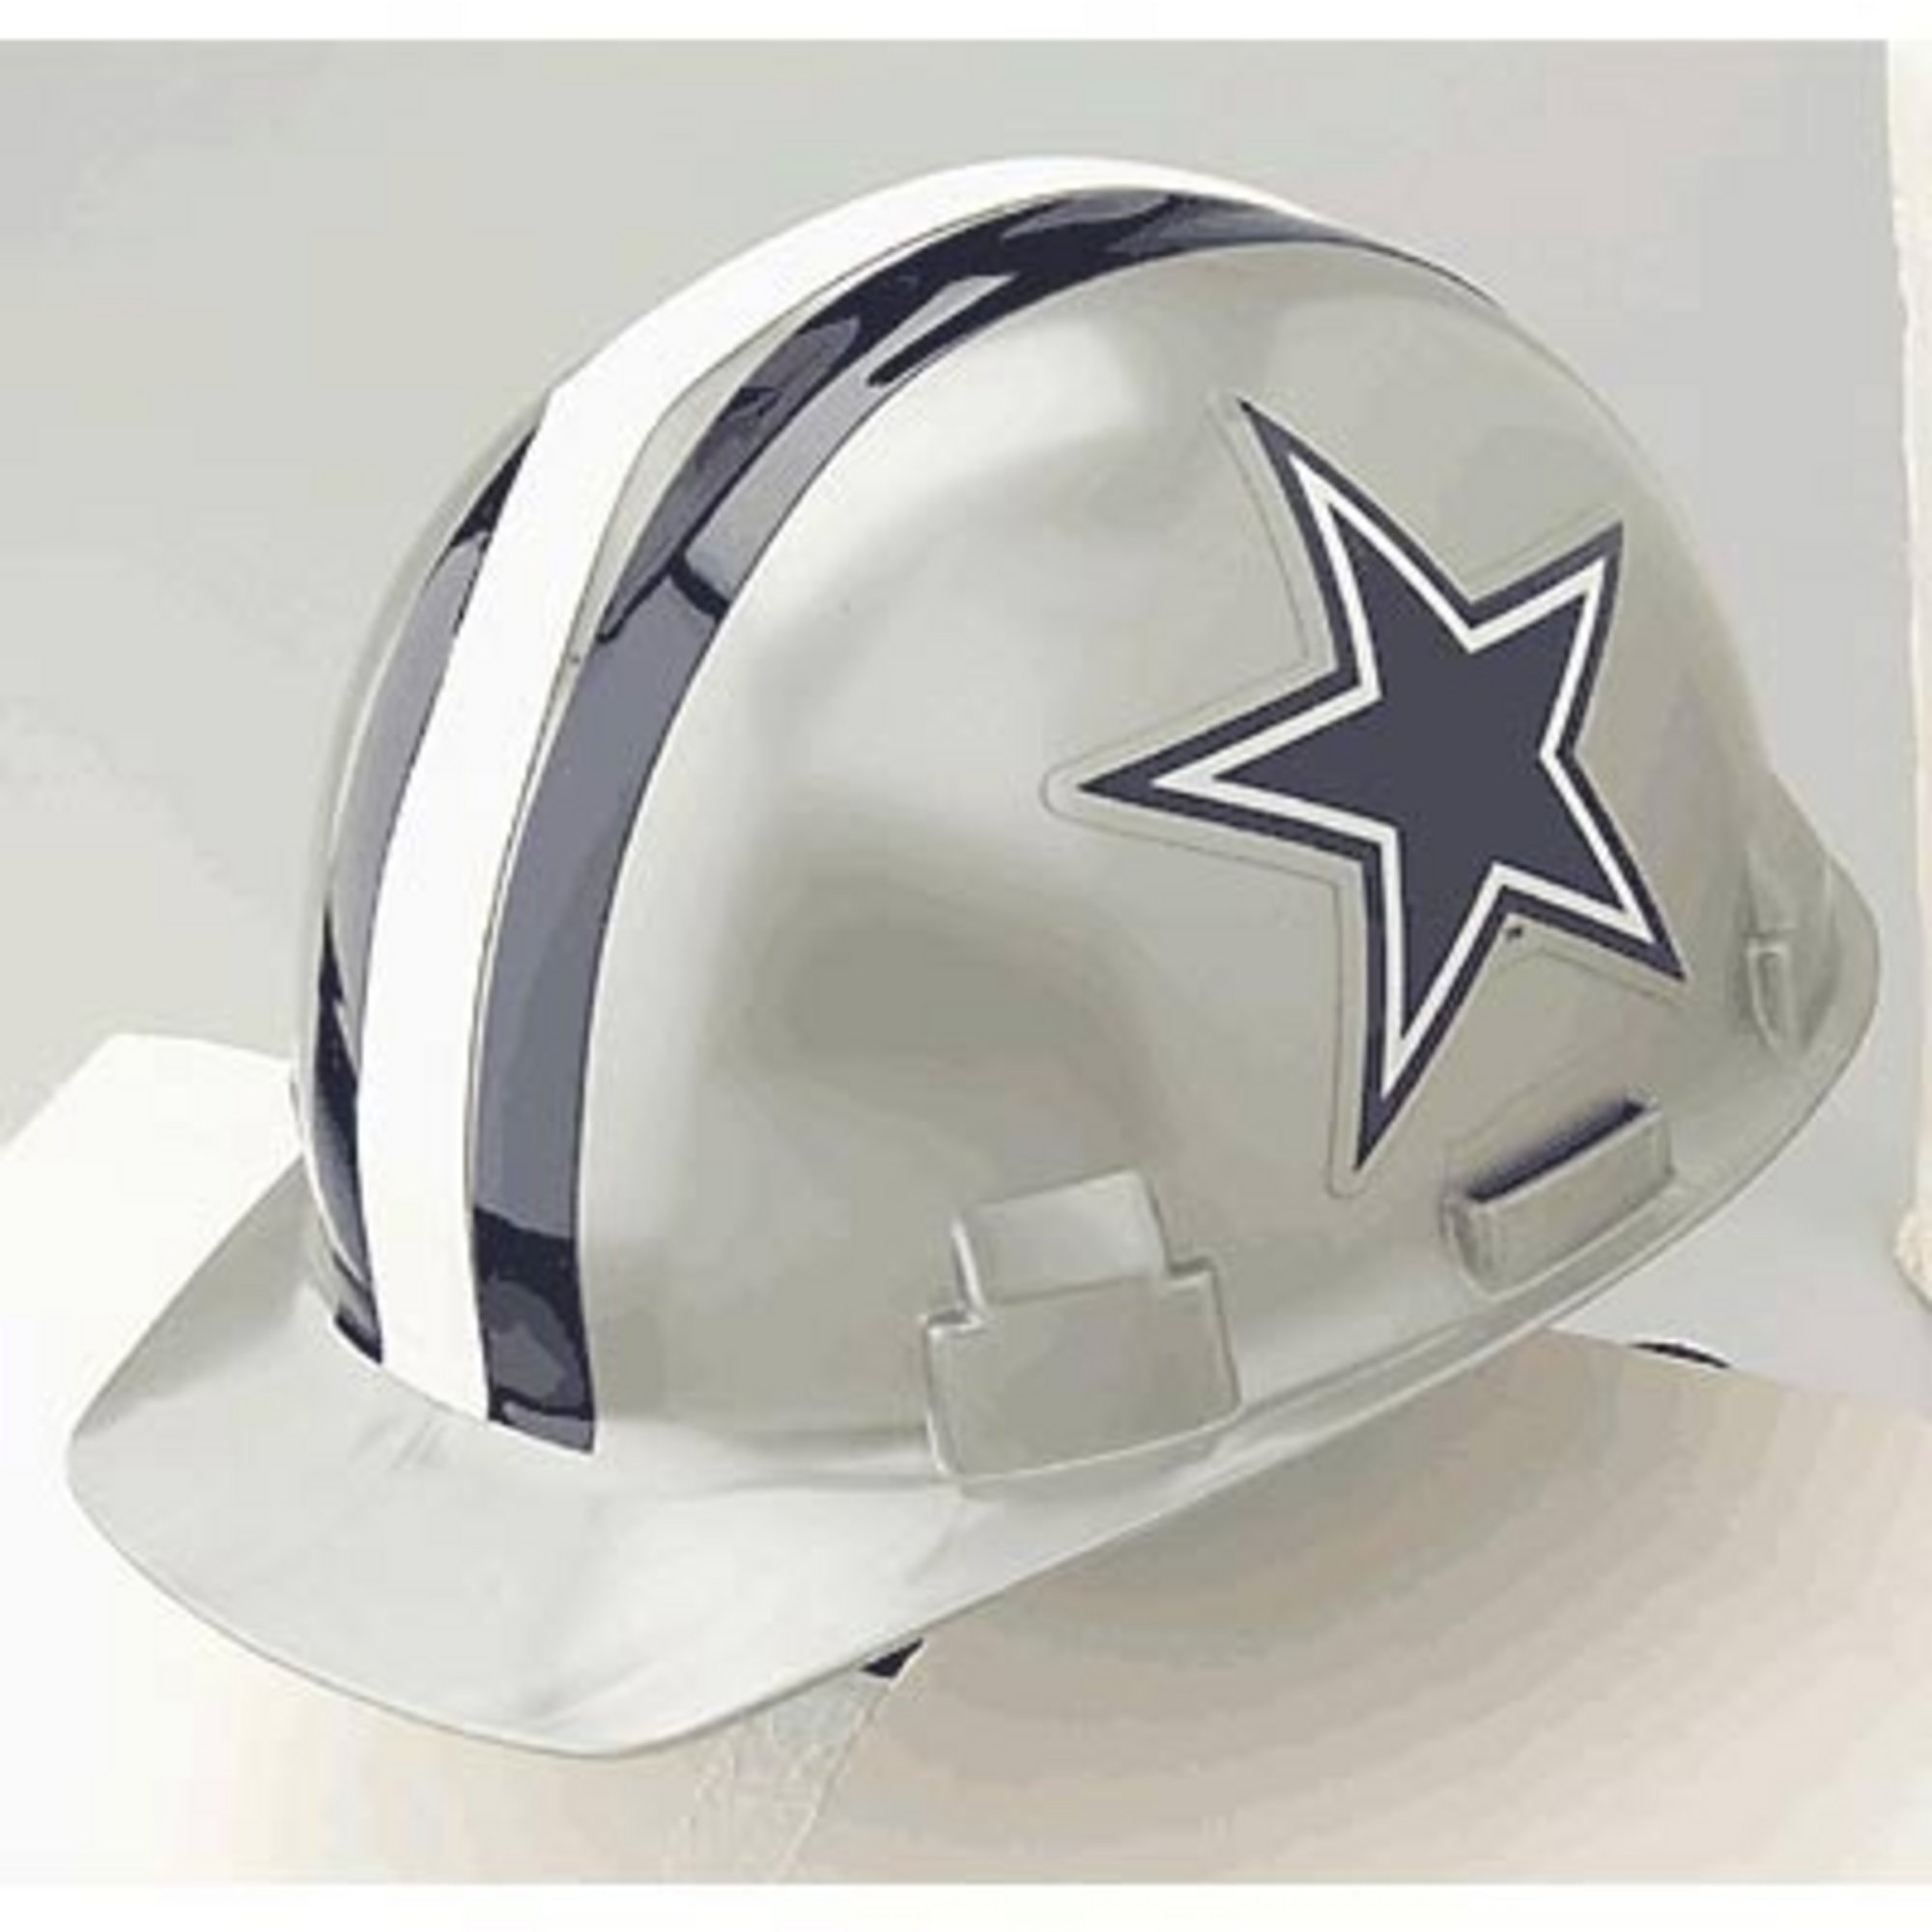 Hard Hat Protection! Dallas Cowboys Insignia!